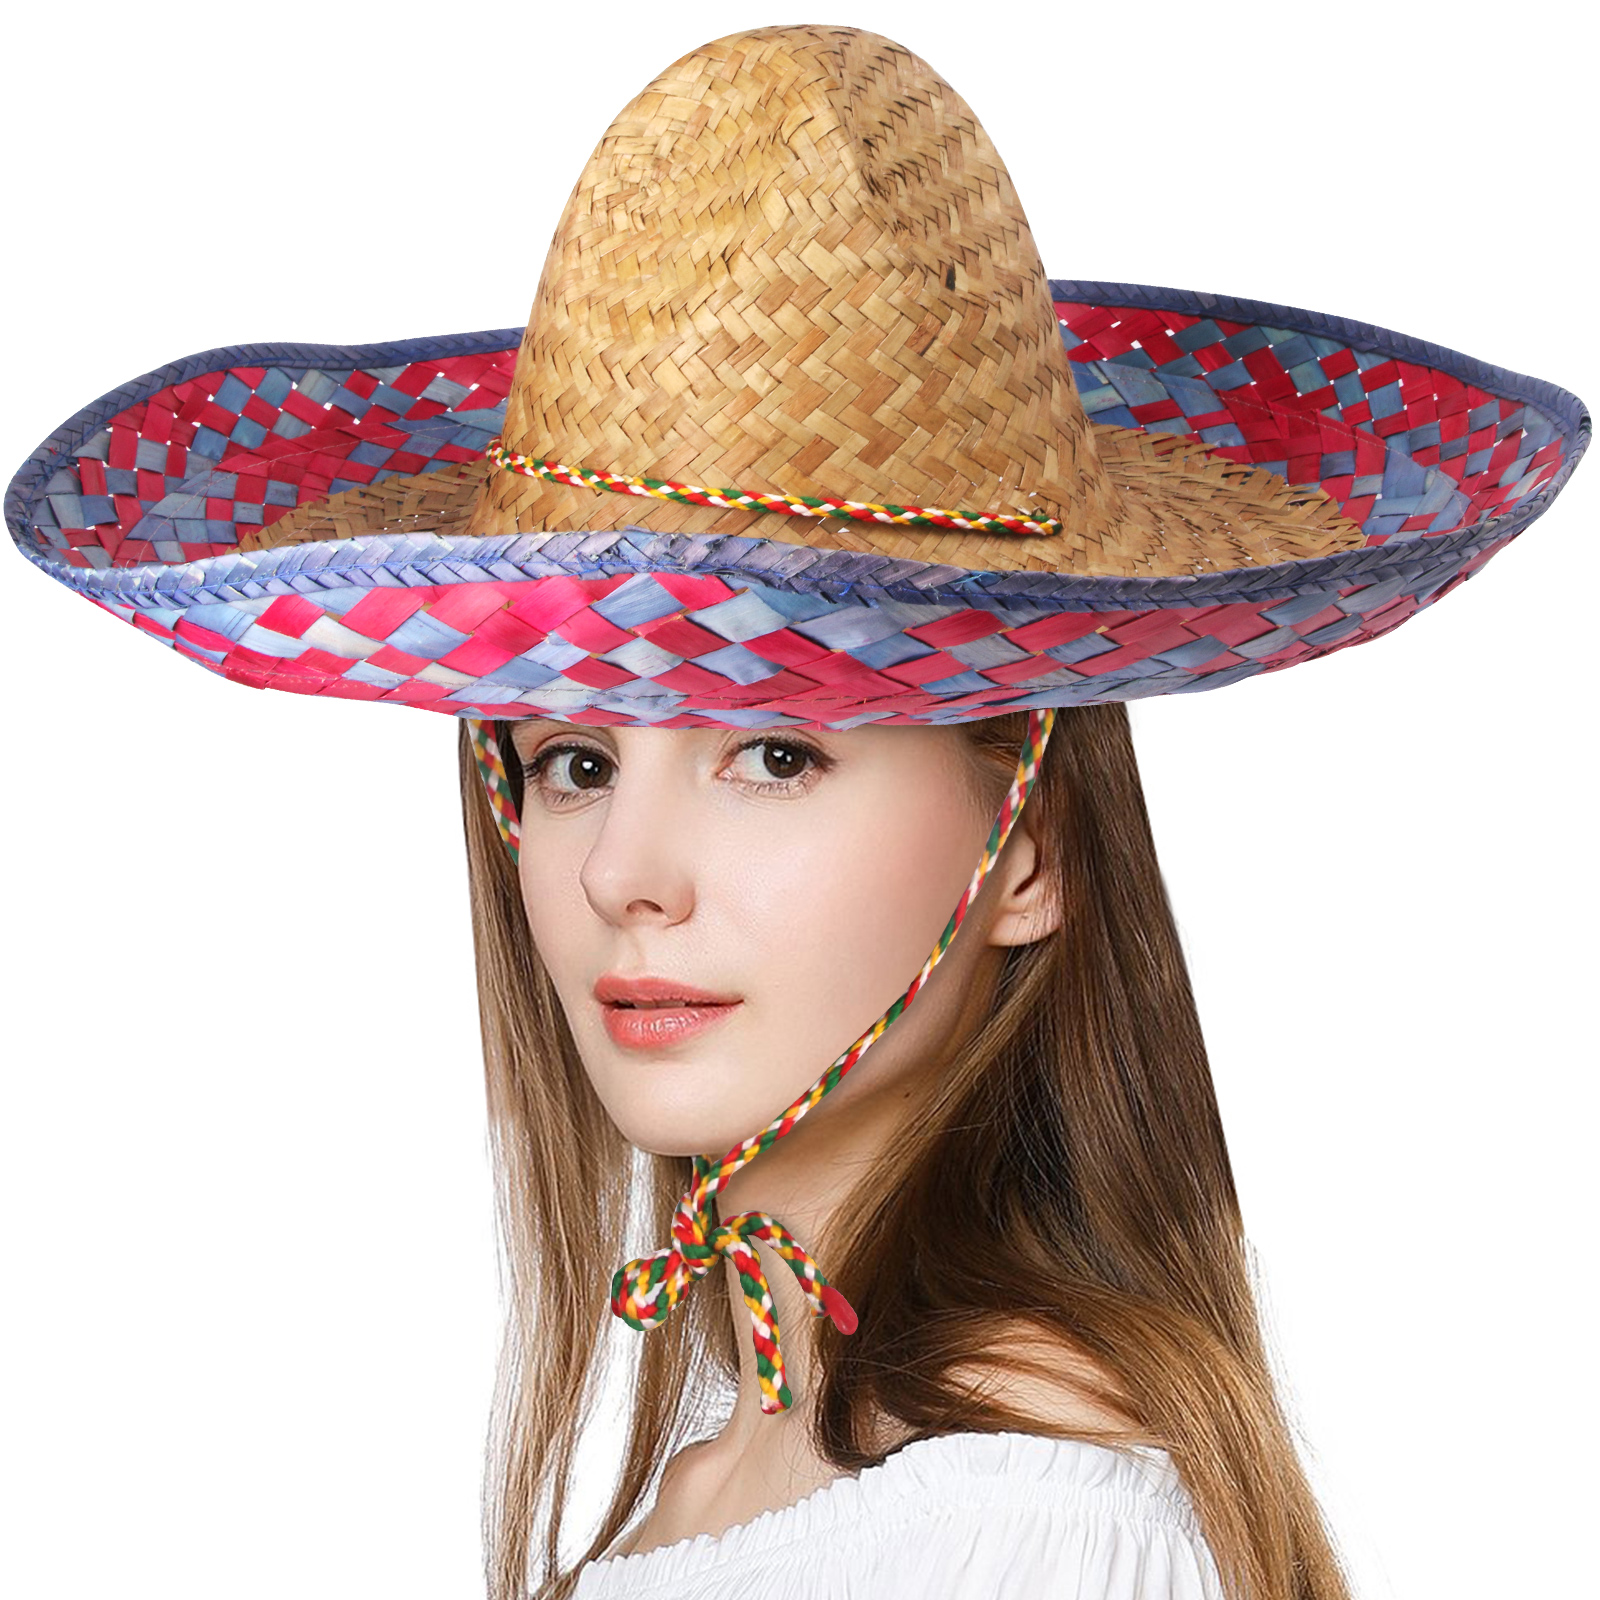 18inch Mexican Sombrero Hat, Straw Hat Mexican Costume Sombrero Kids Cinco de Mayo Spanish Fiesta - image 1 of 9